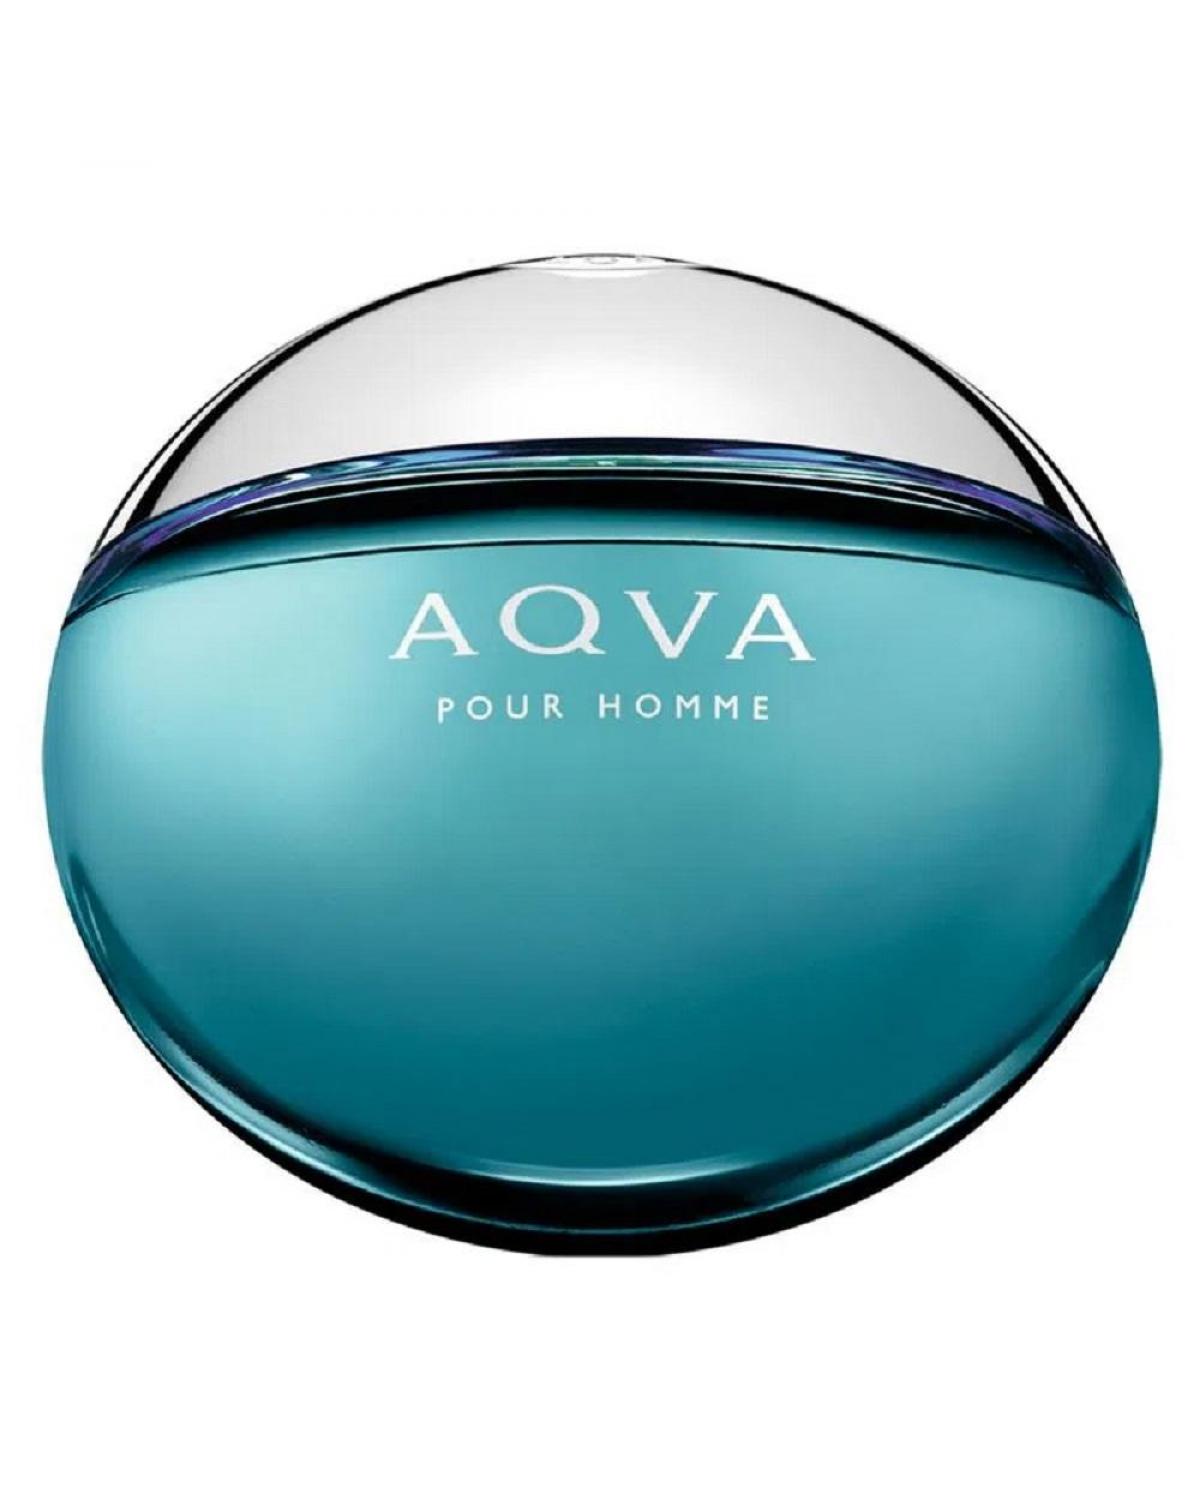 Aqva Pour Homme BVLGARI - Perfume Masculino - Eau de Toilette - 30ml